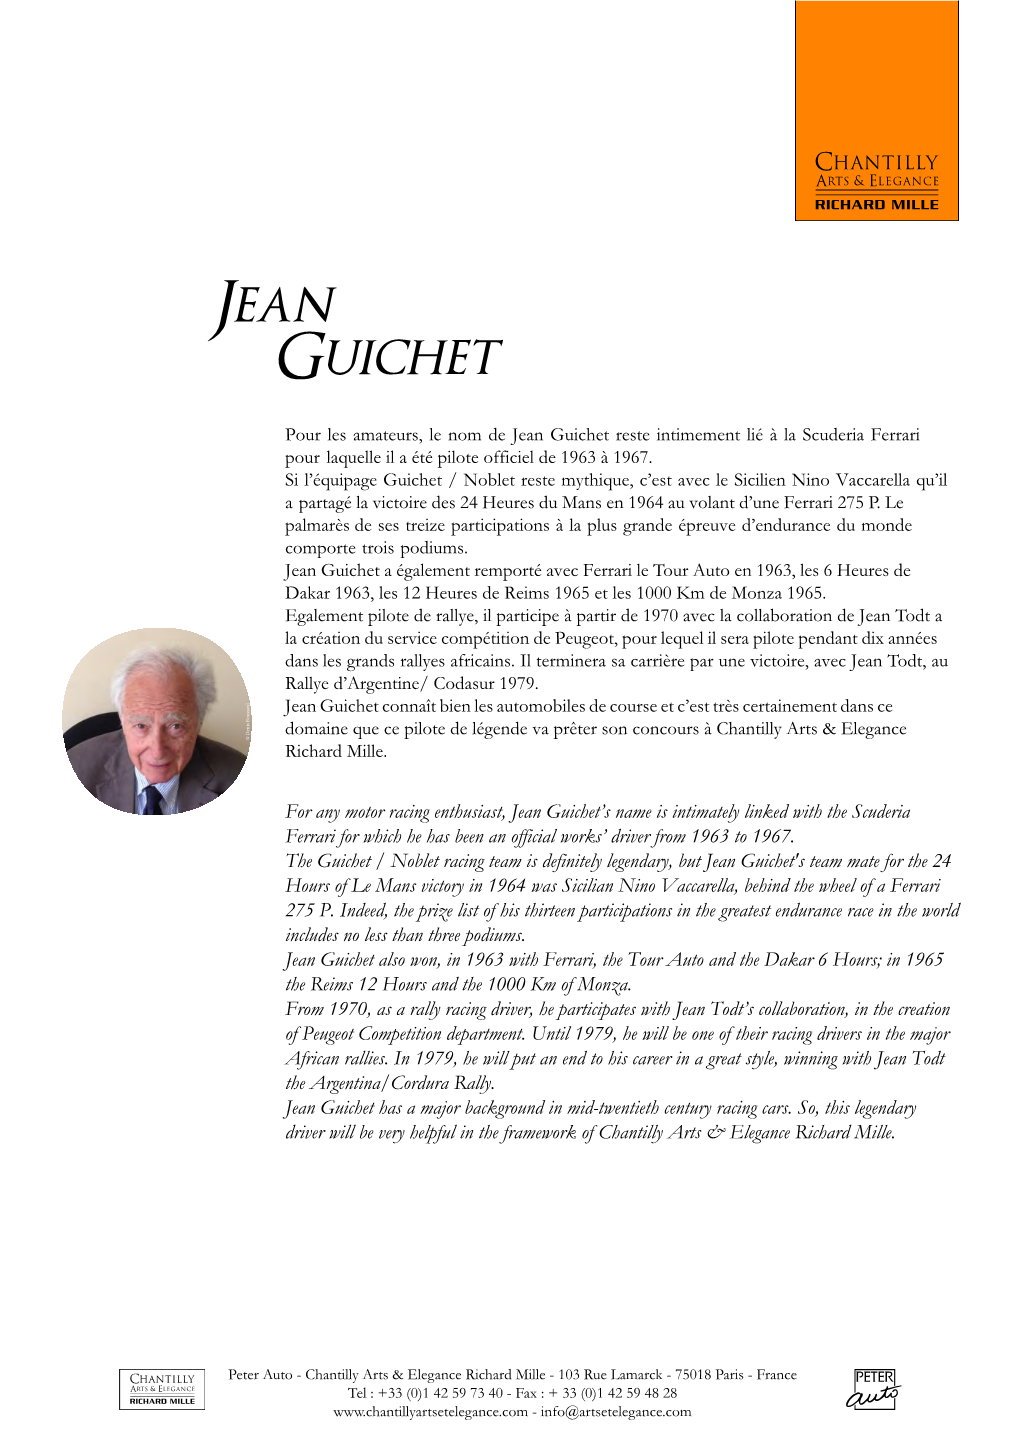 Jean Guichet